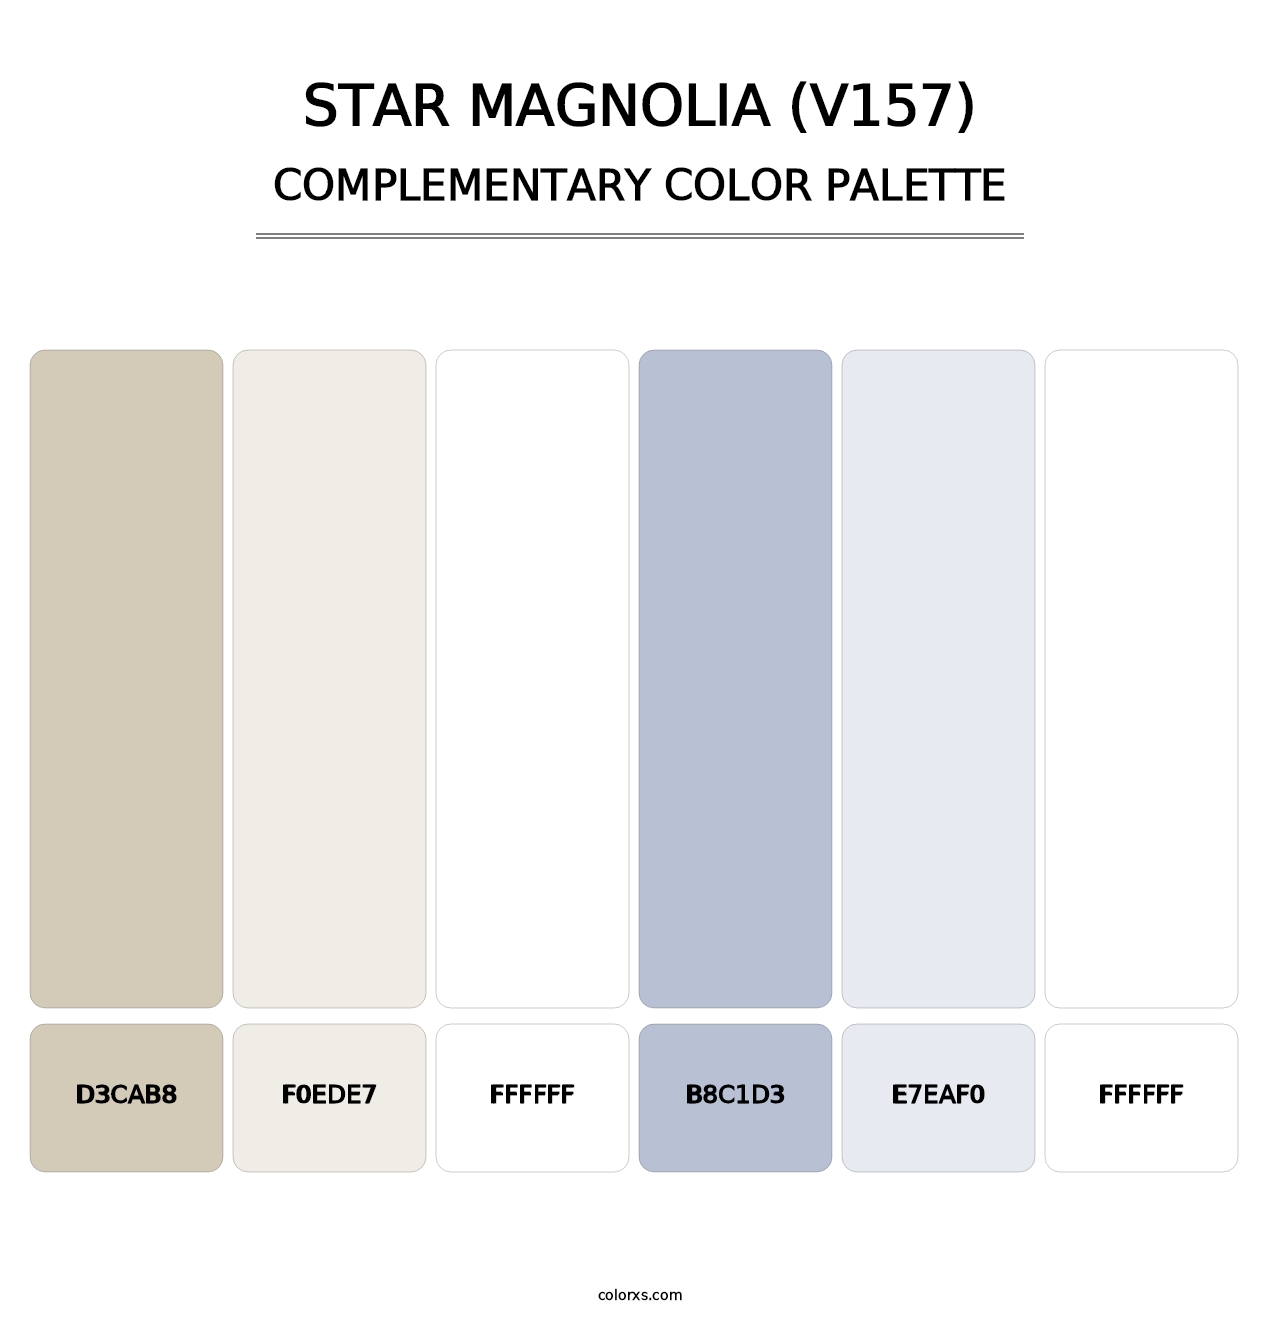 Star Magnolia (V157) - Complementary Color Palette